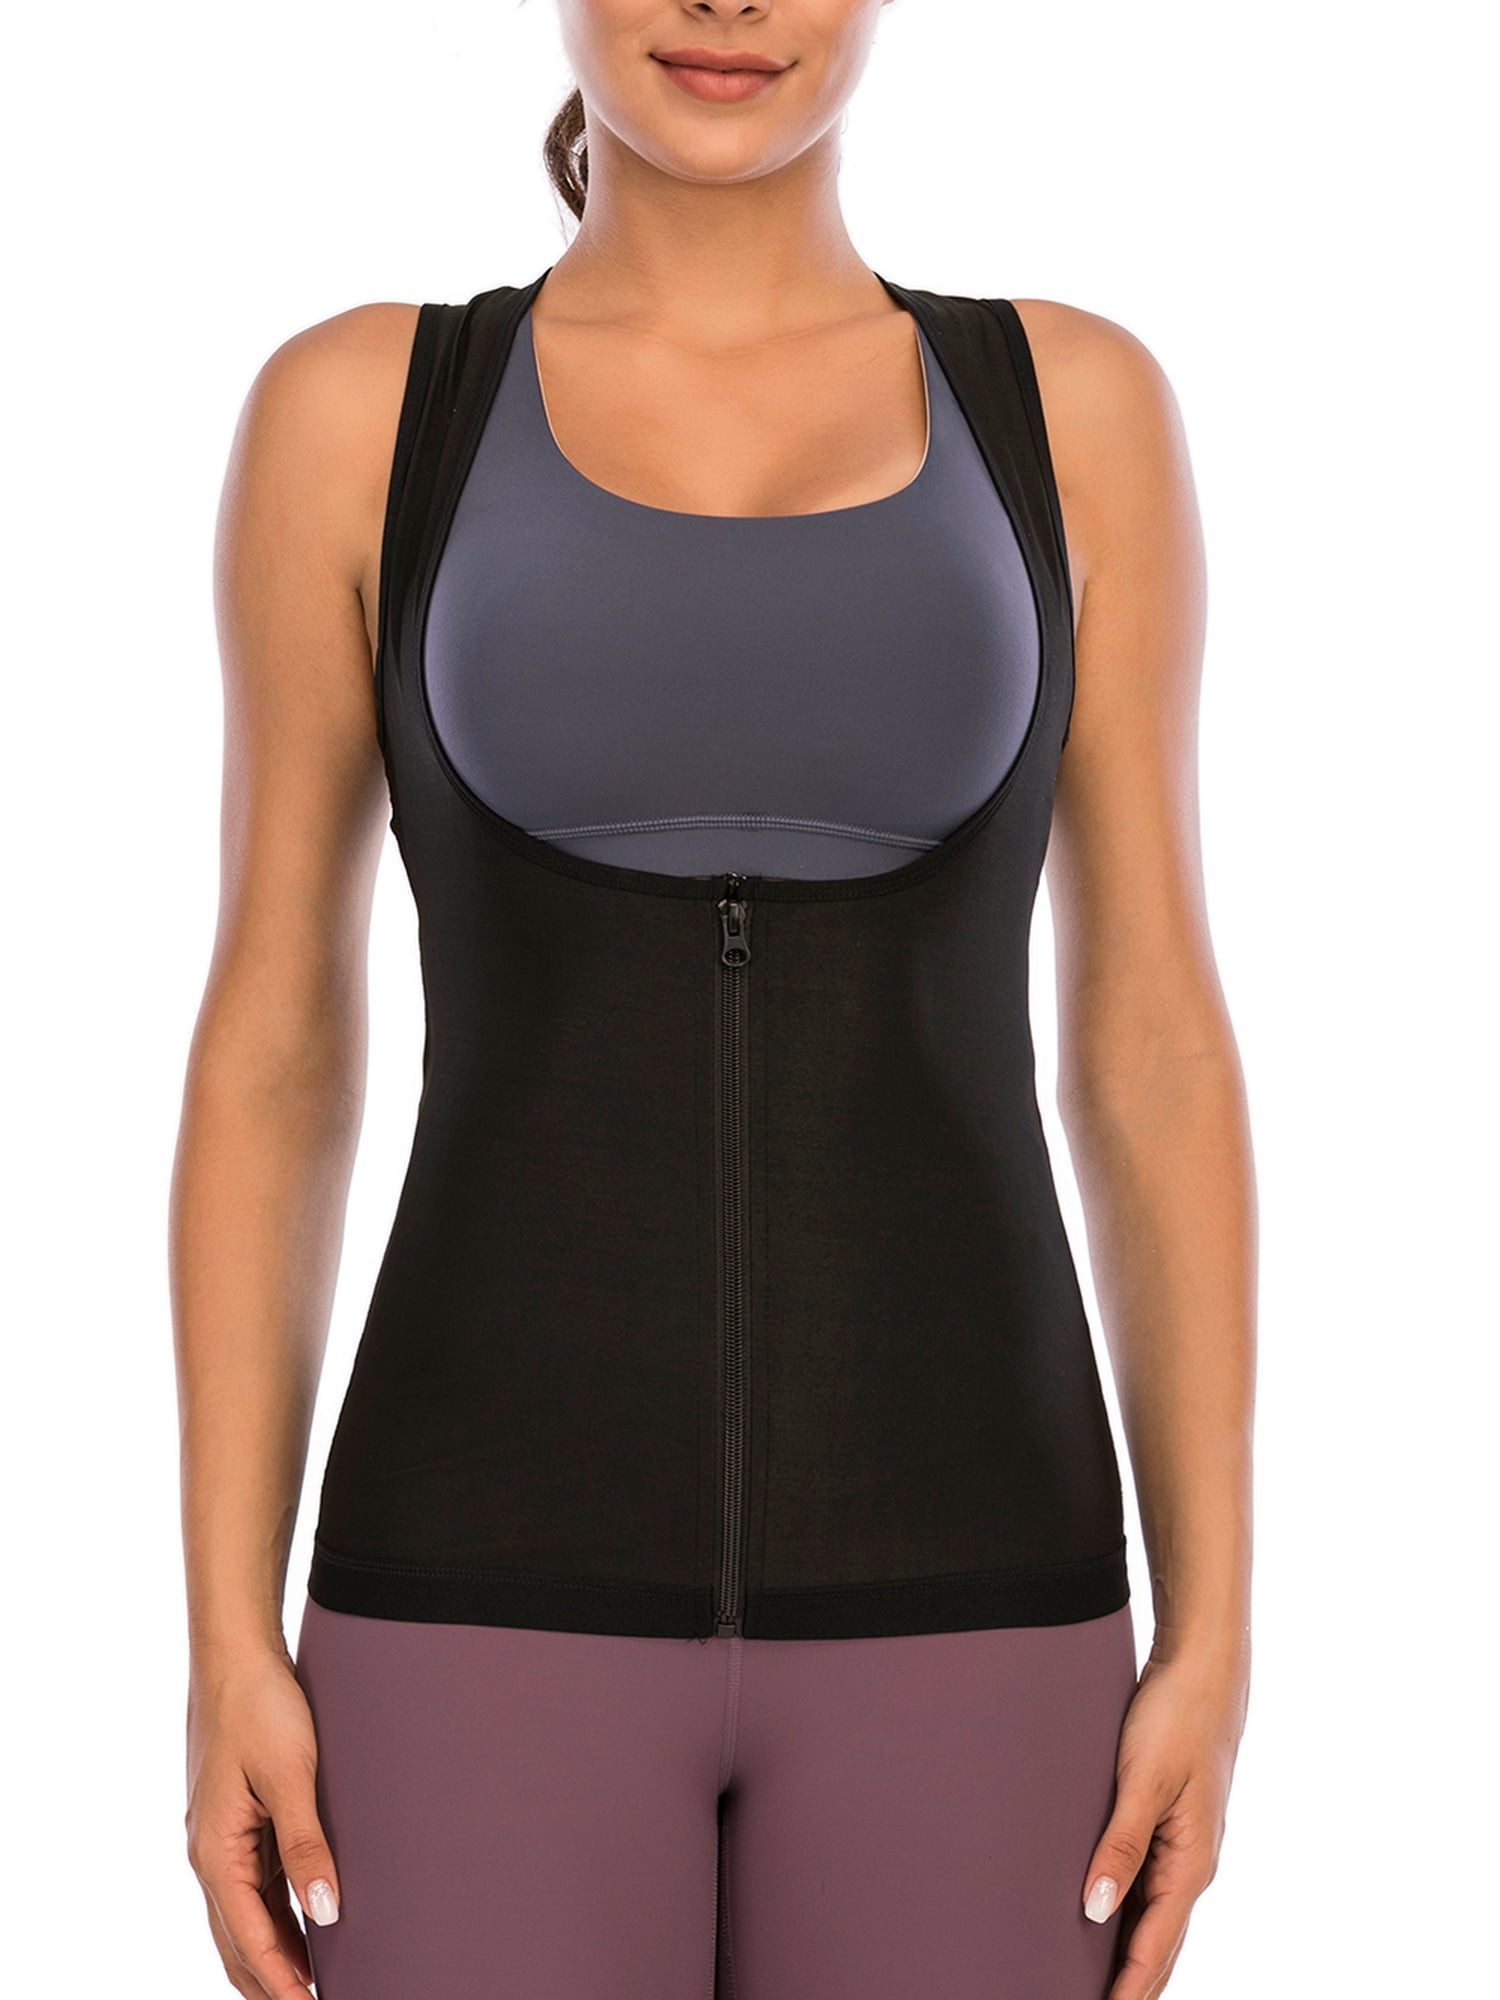 COMFREE Sauna Vest Waist Trainer for Women with Zipper Hook Eye Workout Body Shaper Neoprene Sweat Sauna Suit 